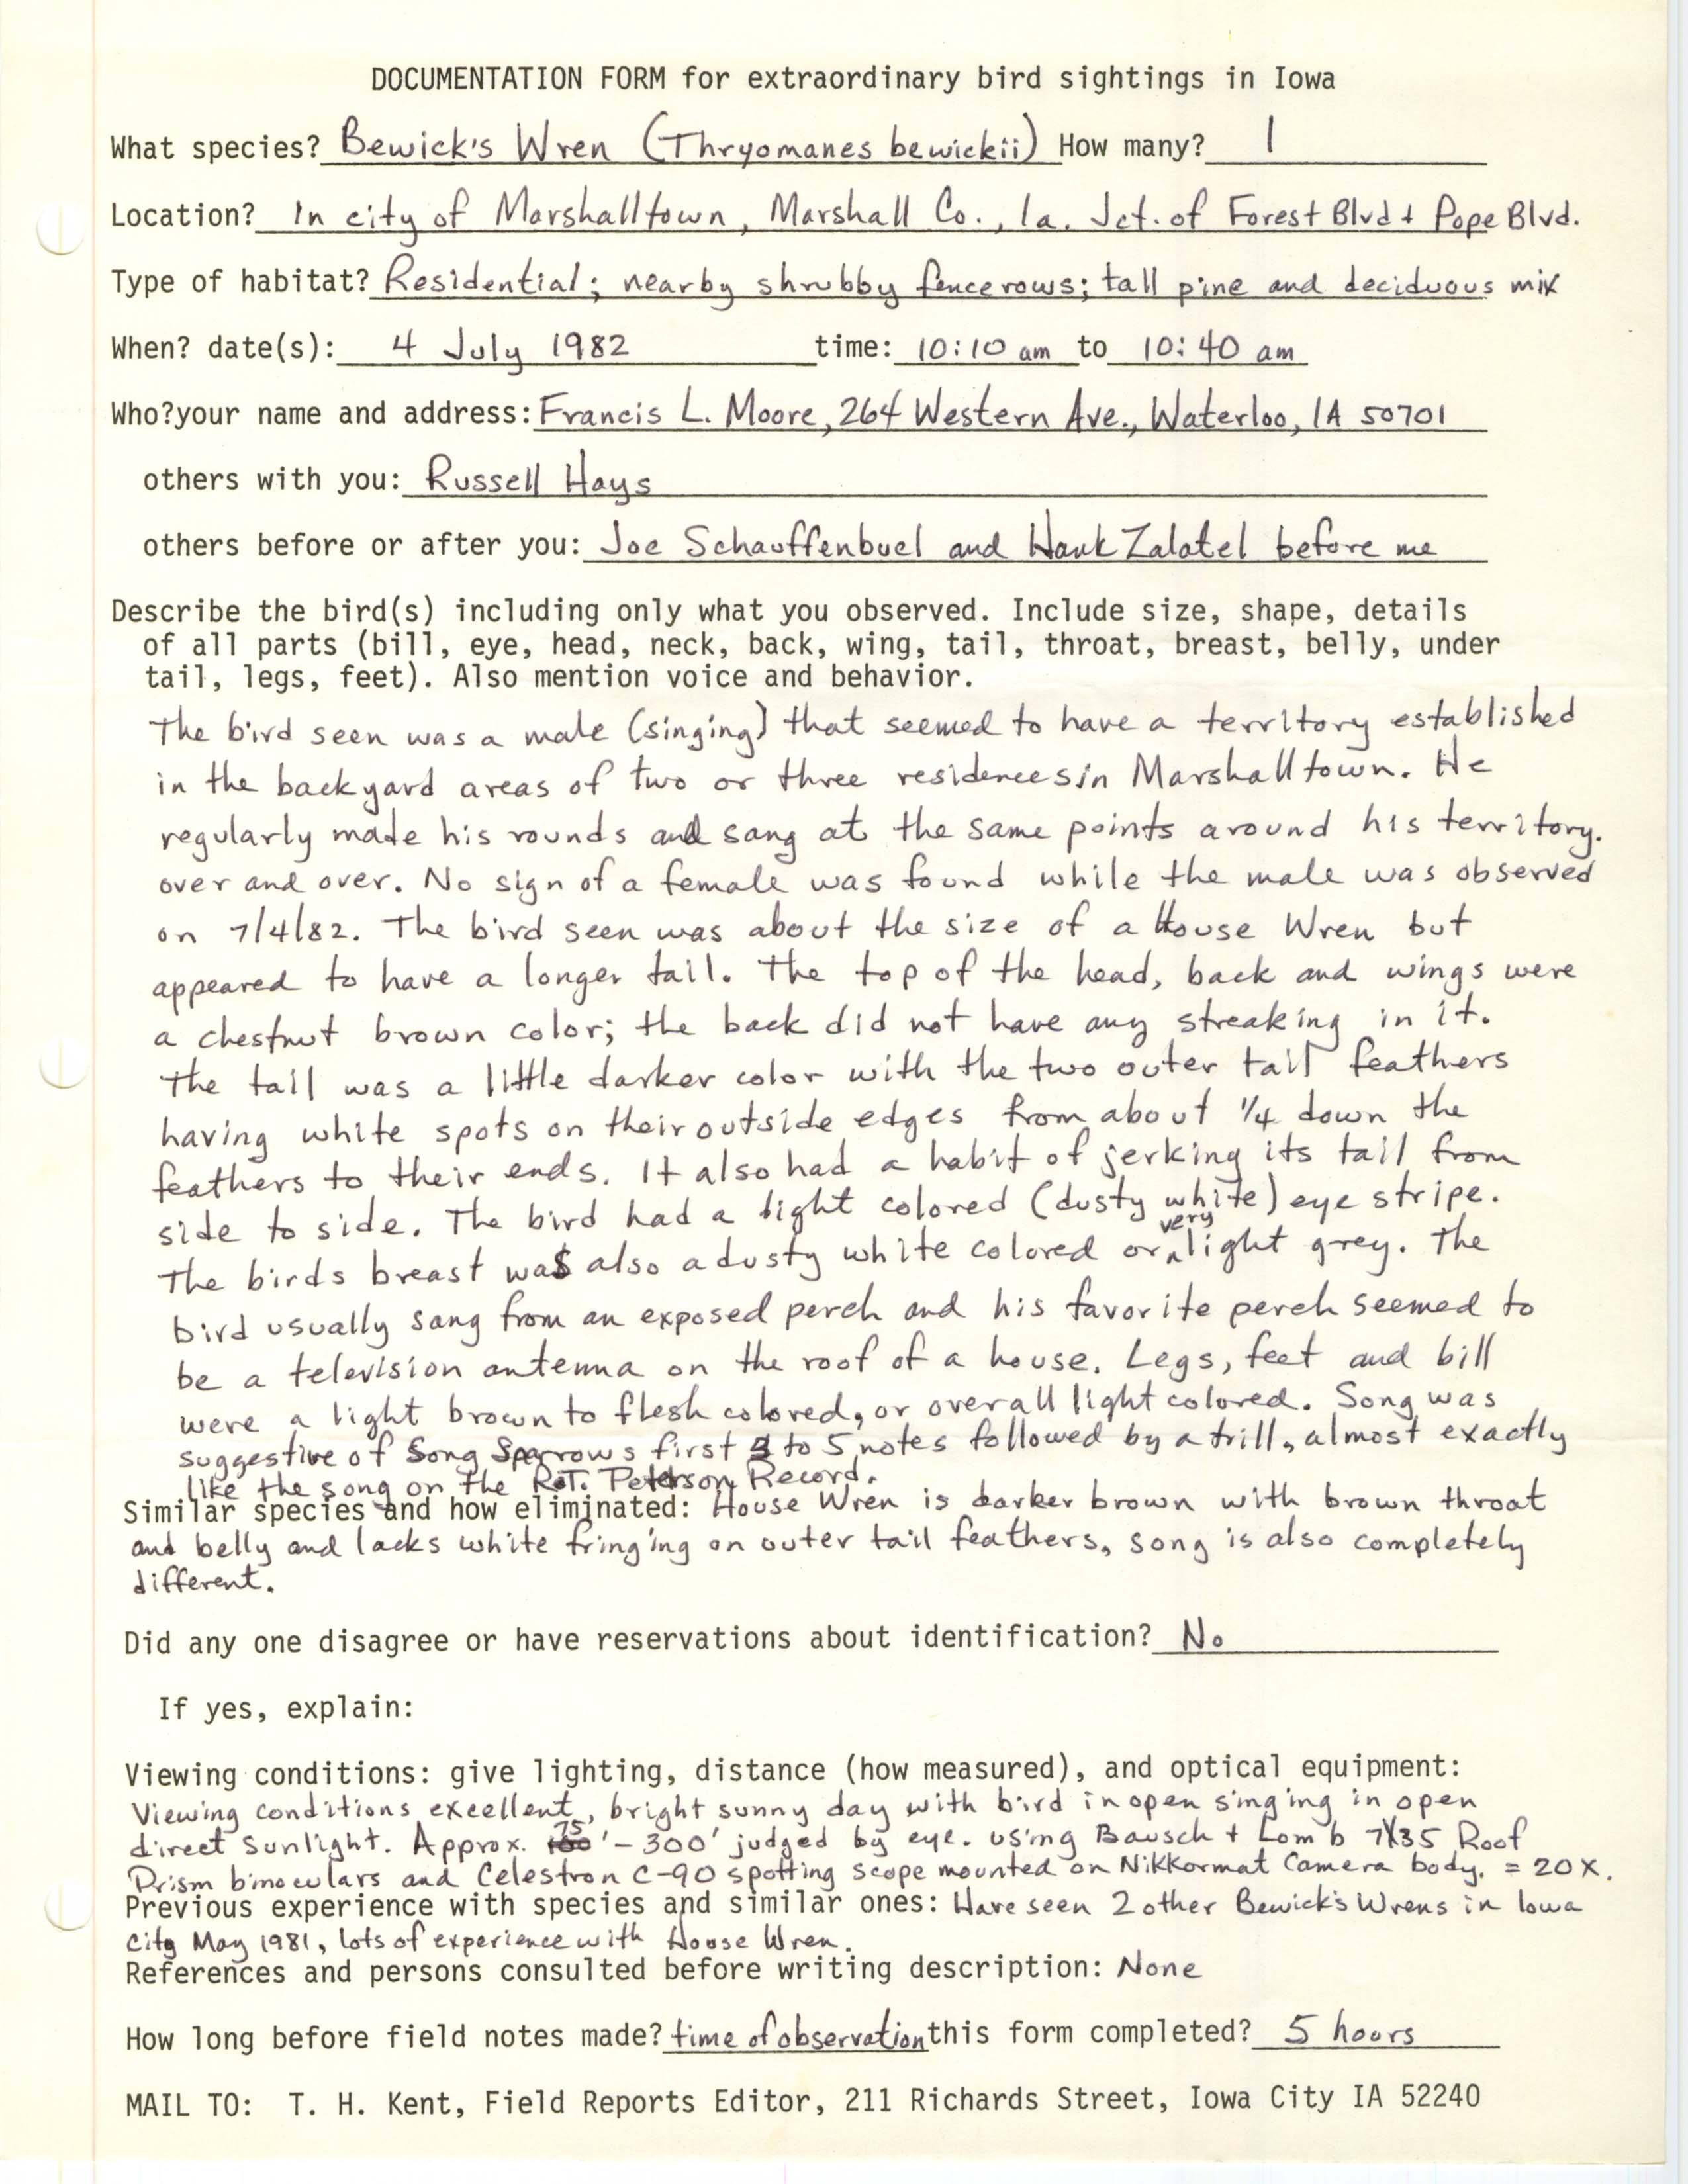 Rare bird documentation form for Bewick's Wren at Marshalltown, 1982